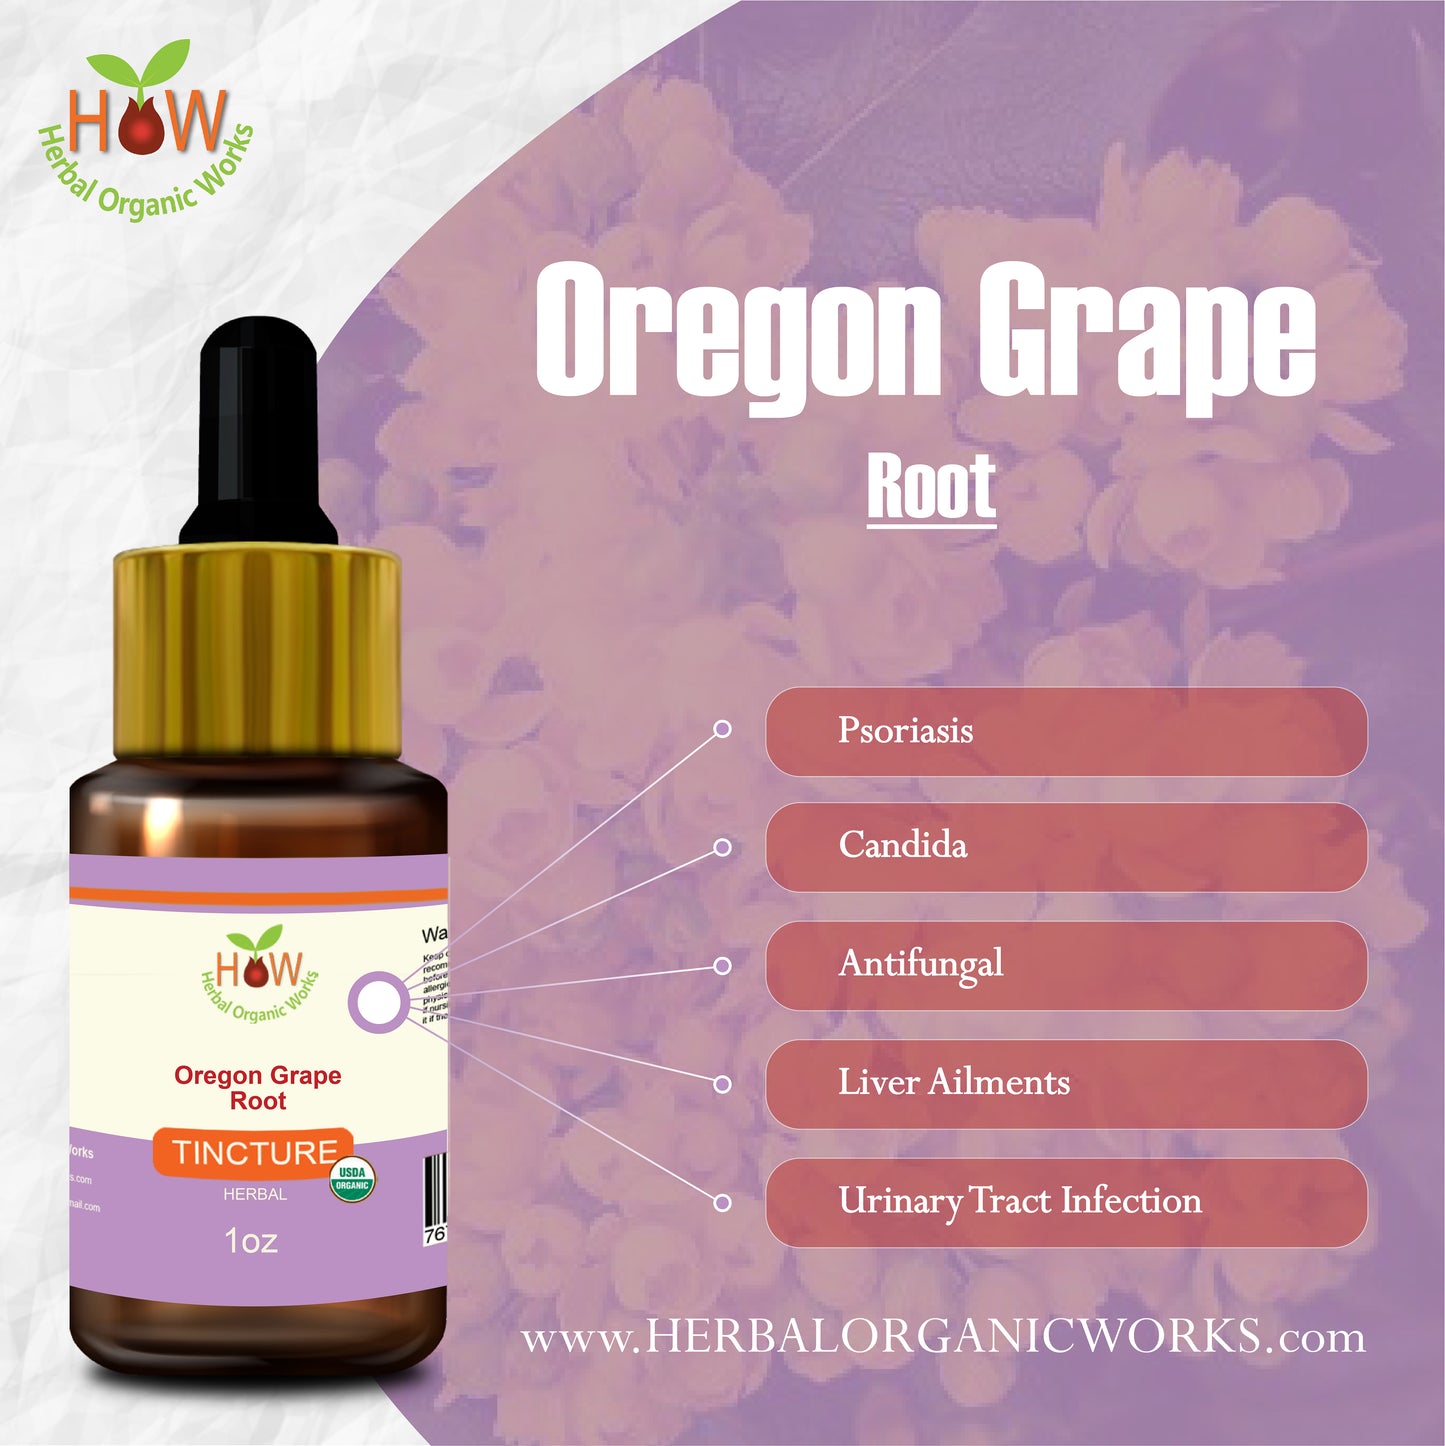 Oregon Grape Root